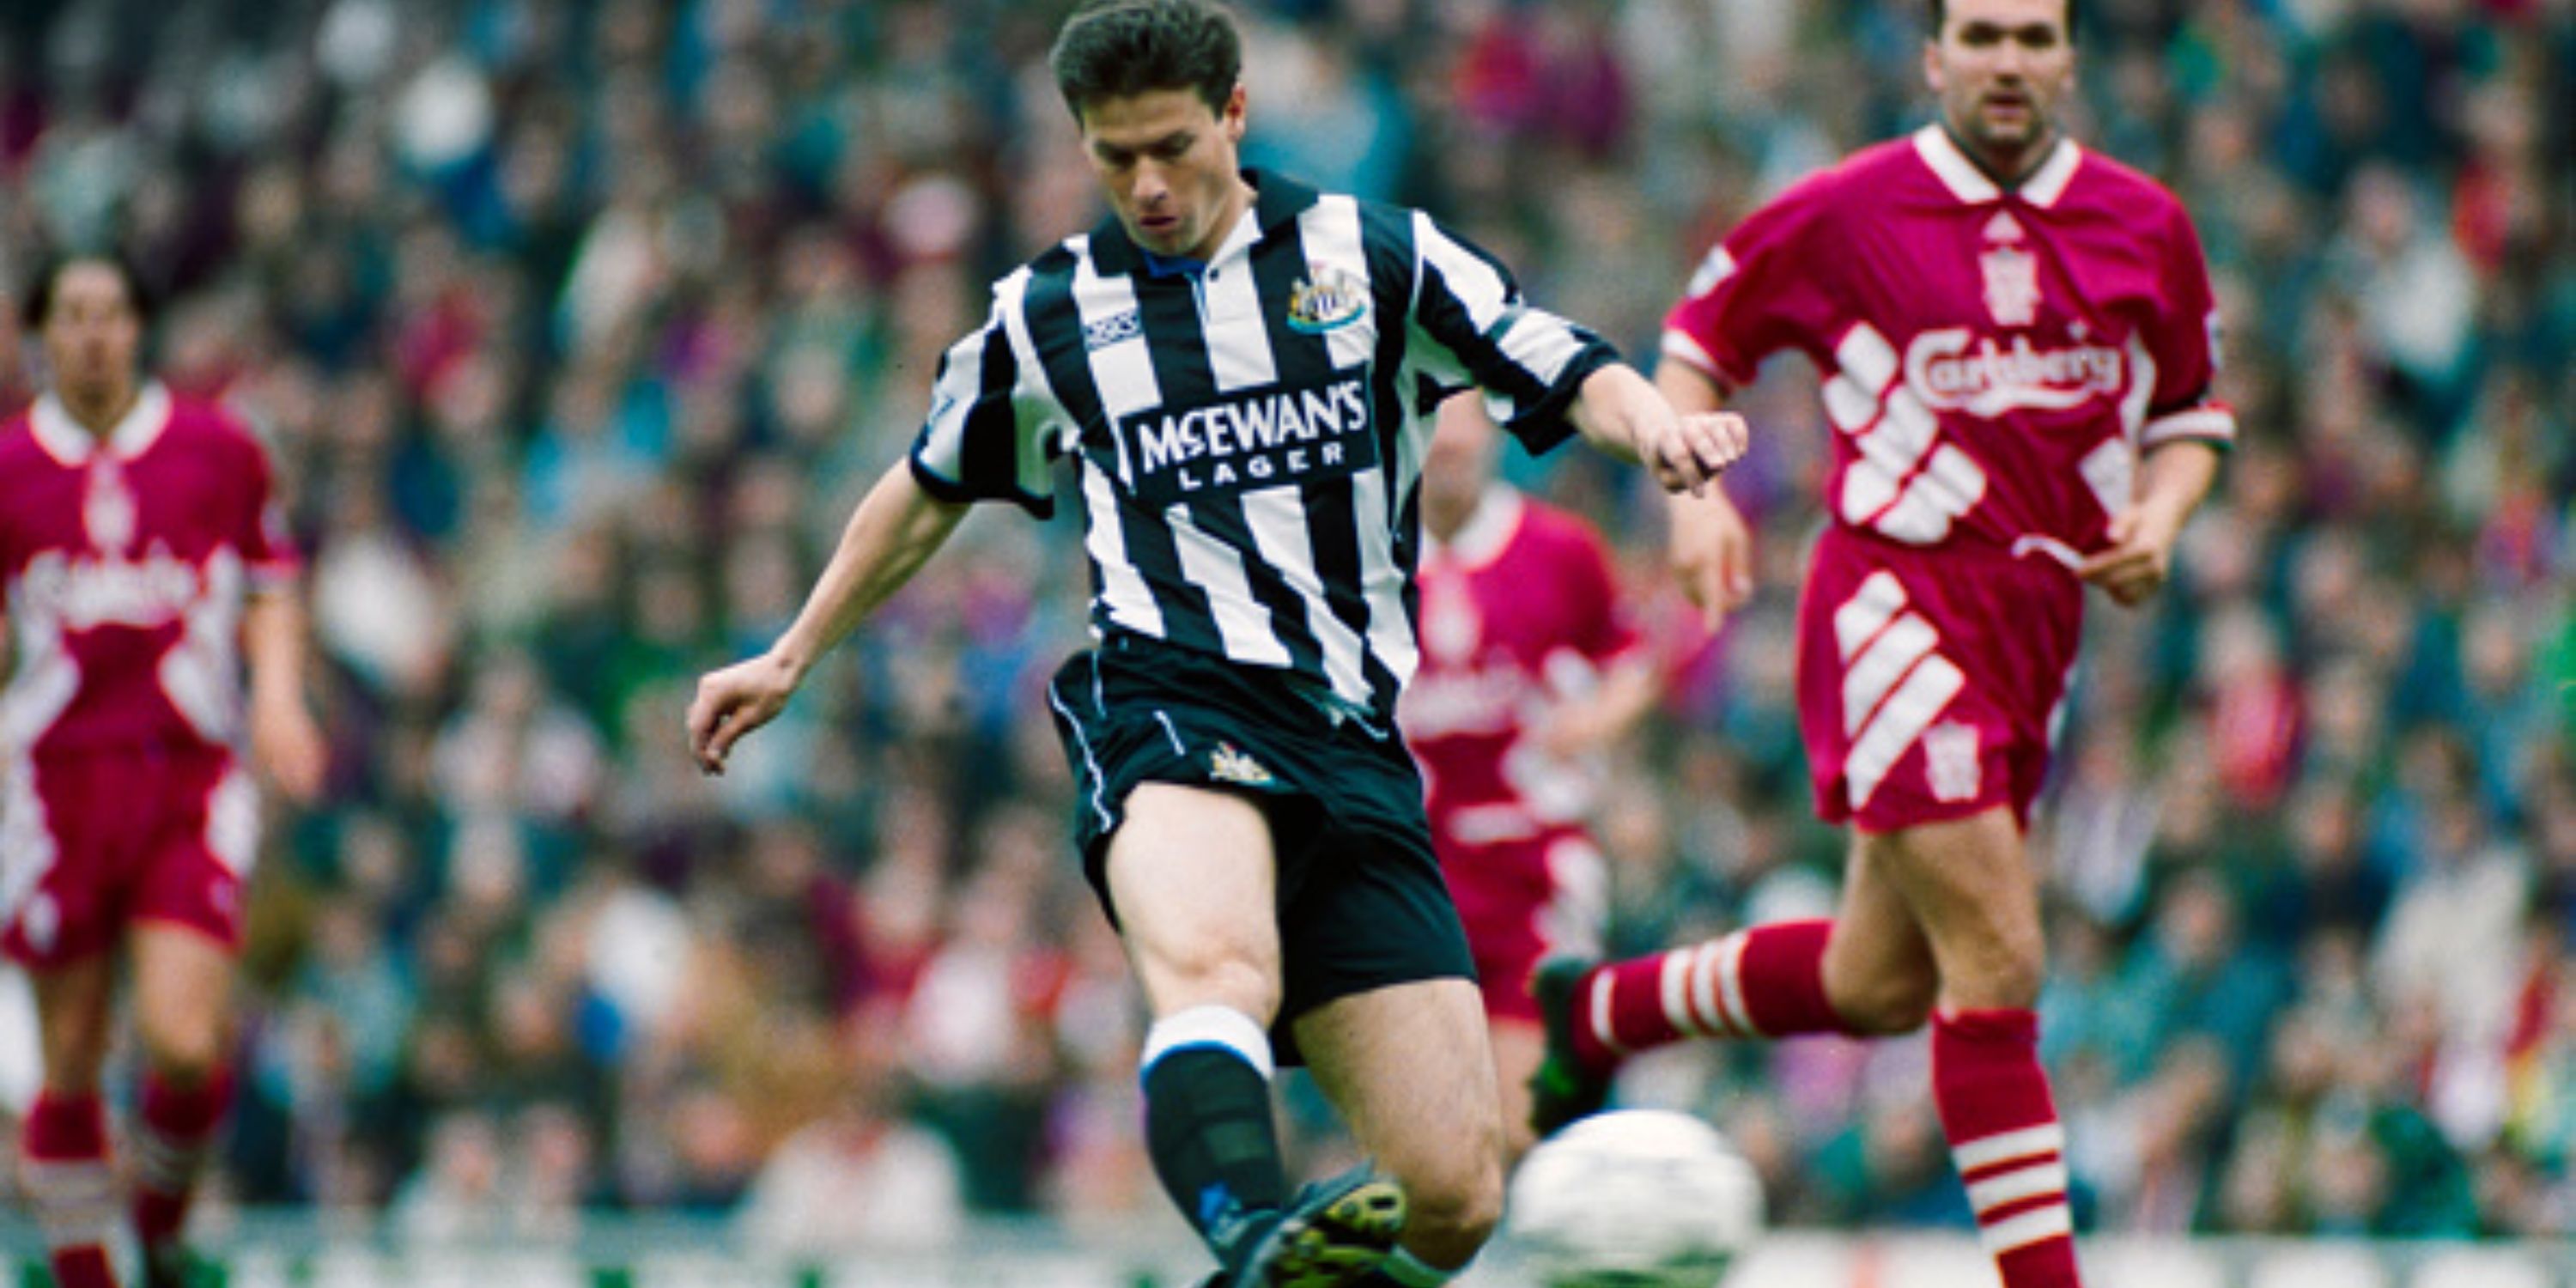 Newcastle 1993-94